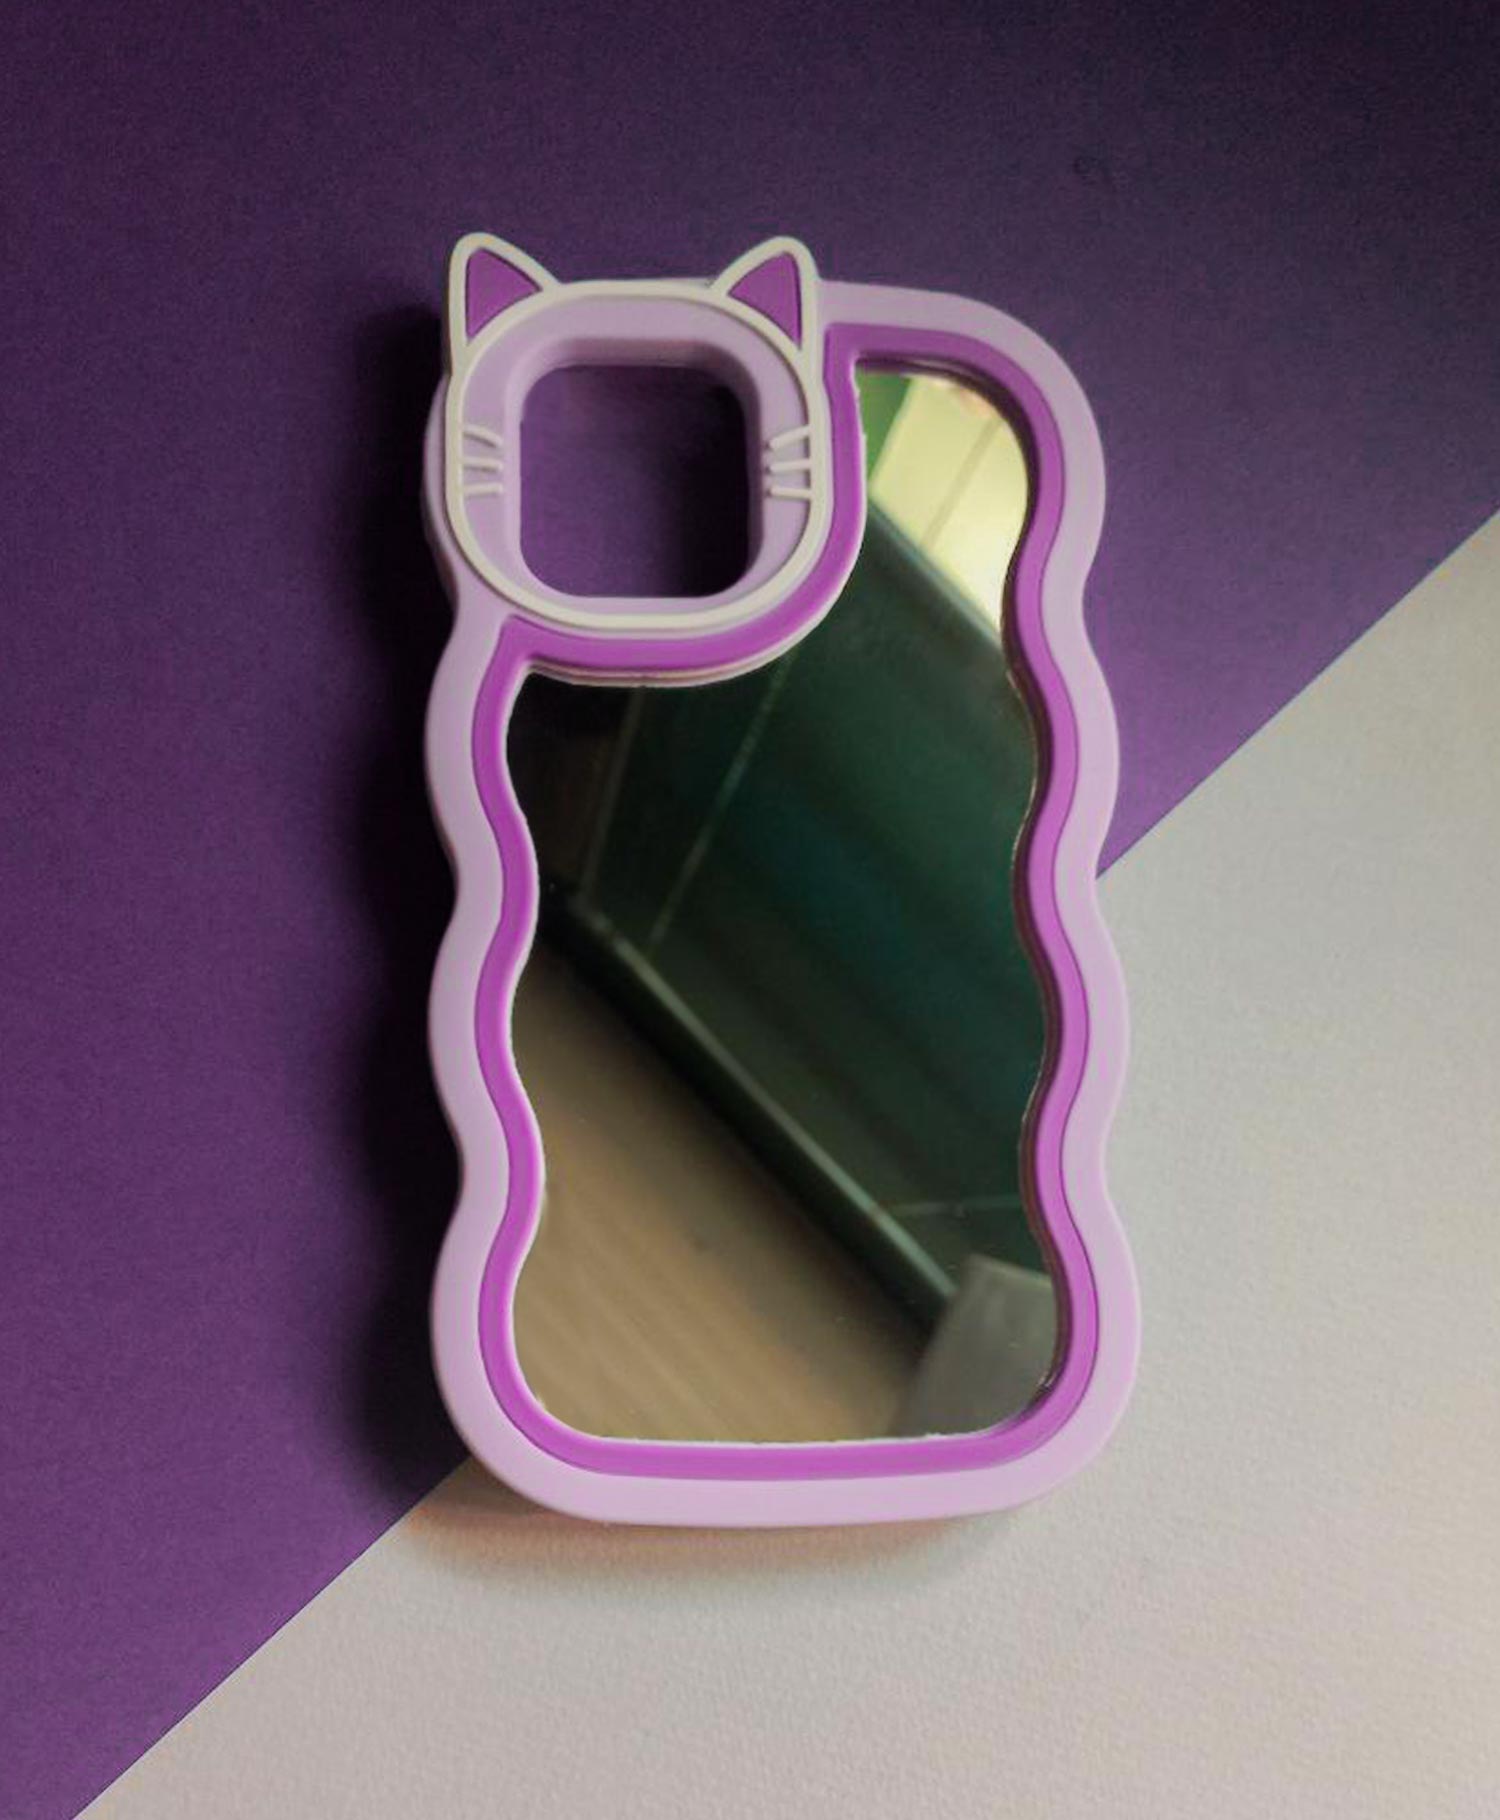 کاور گربه موج آینه ای Iphone 12 Pro Max